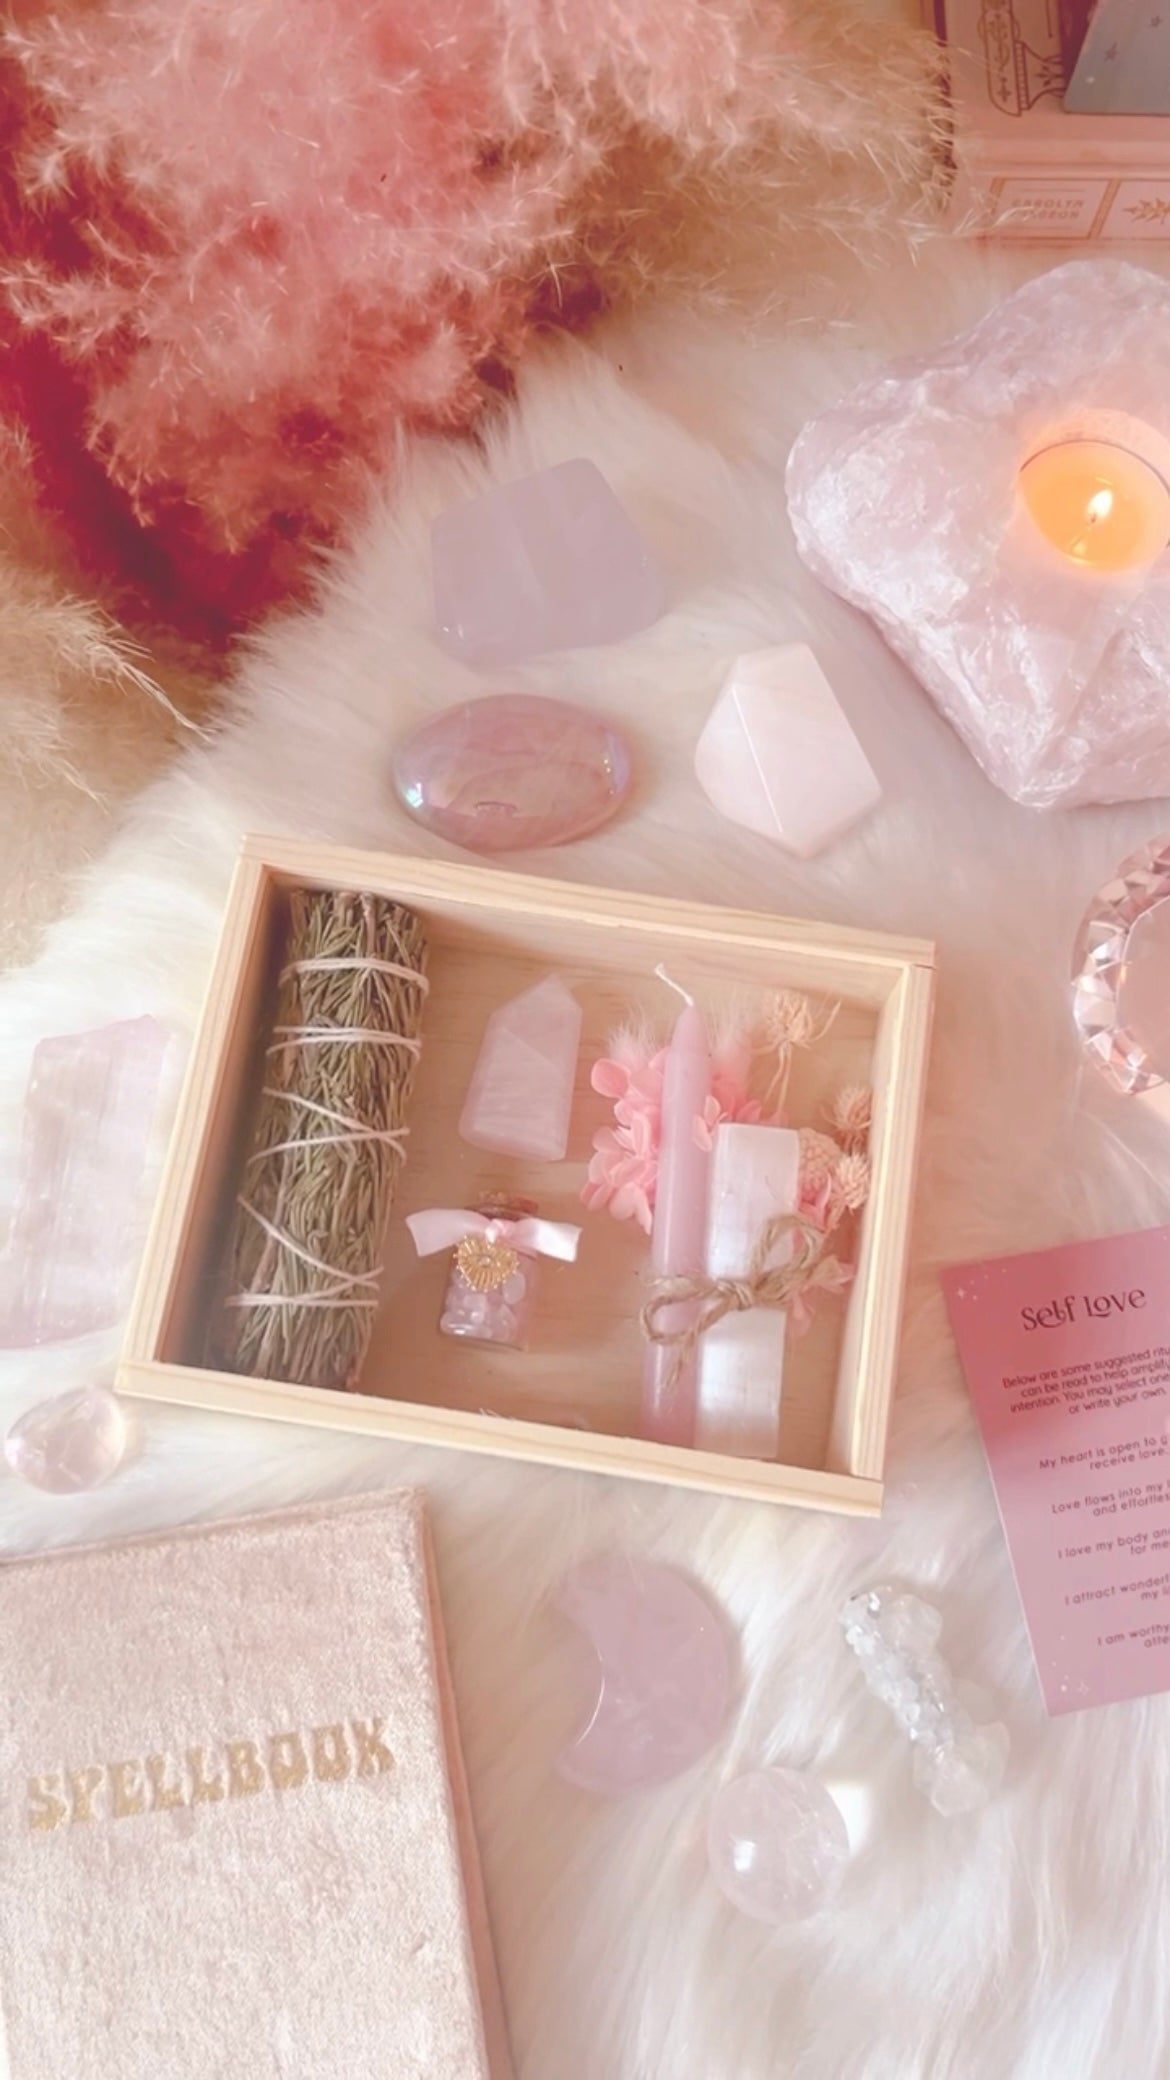 Self-Love Spell Ritual Kit